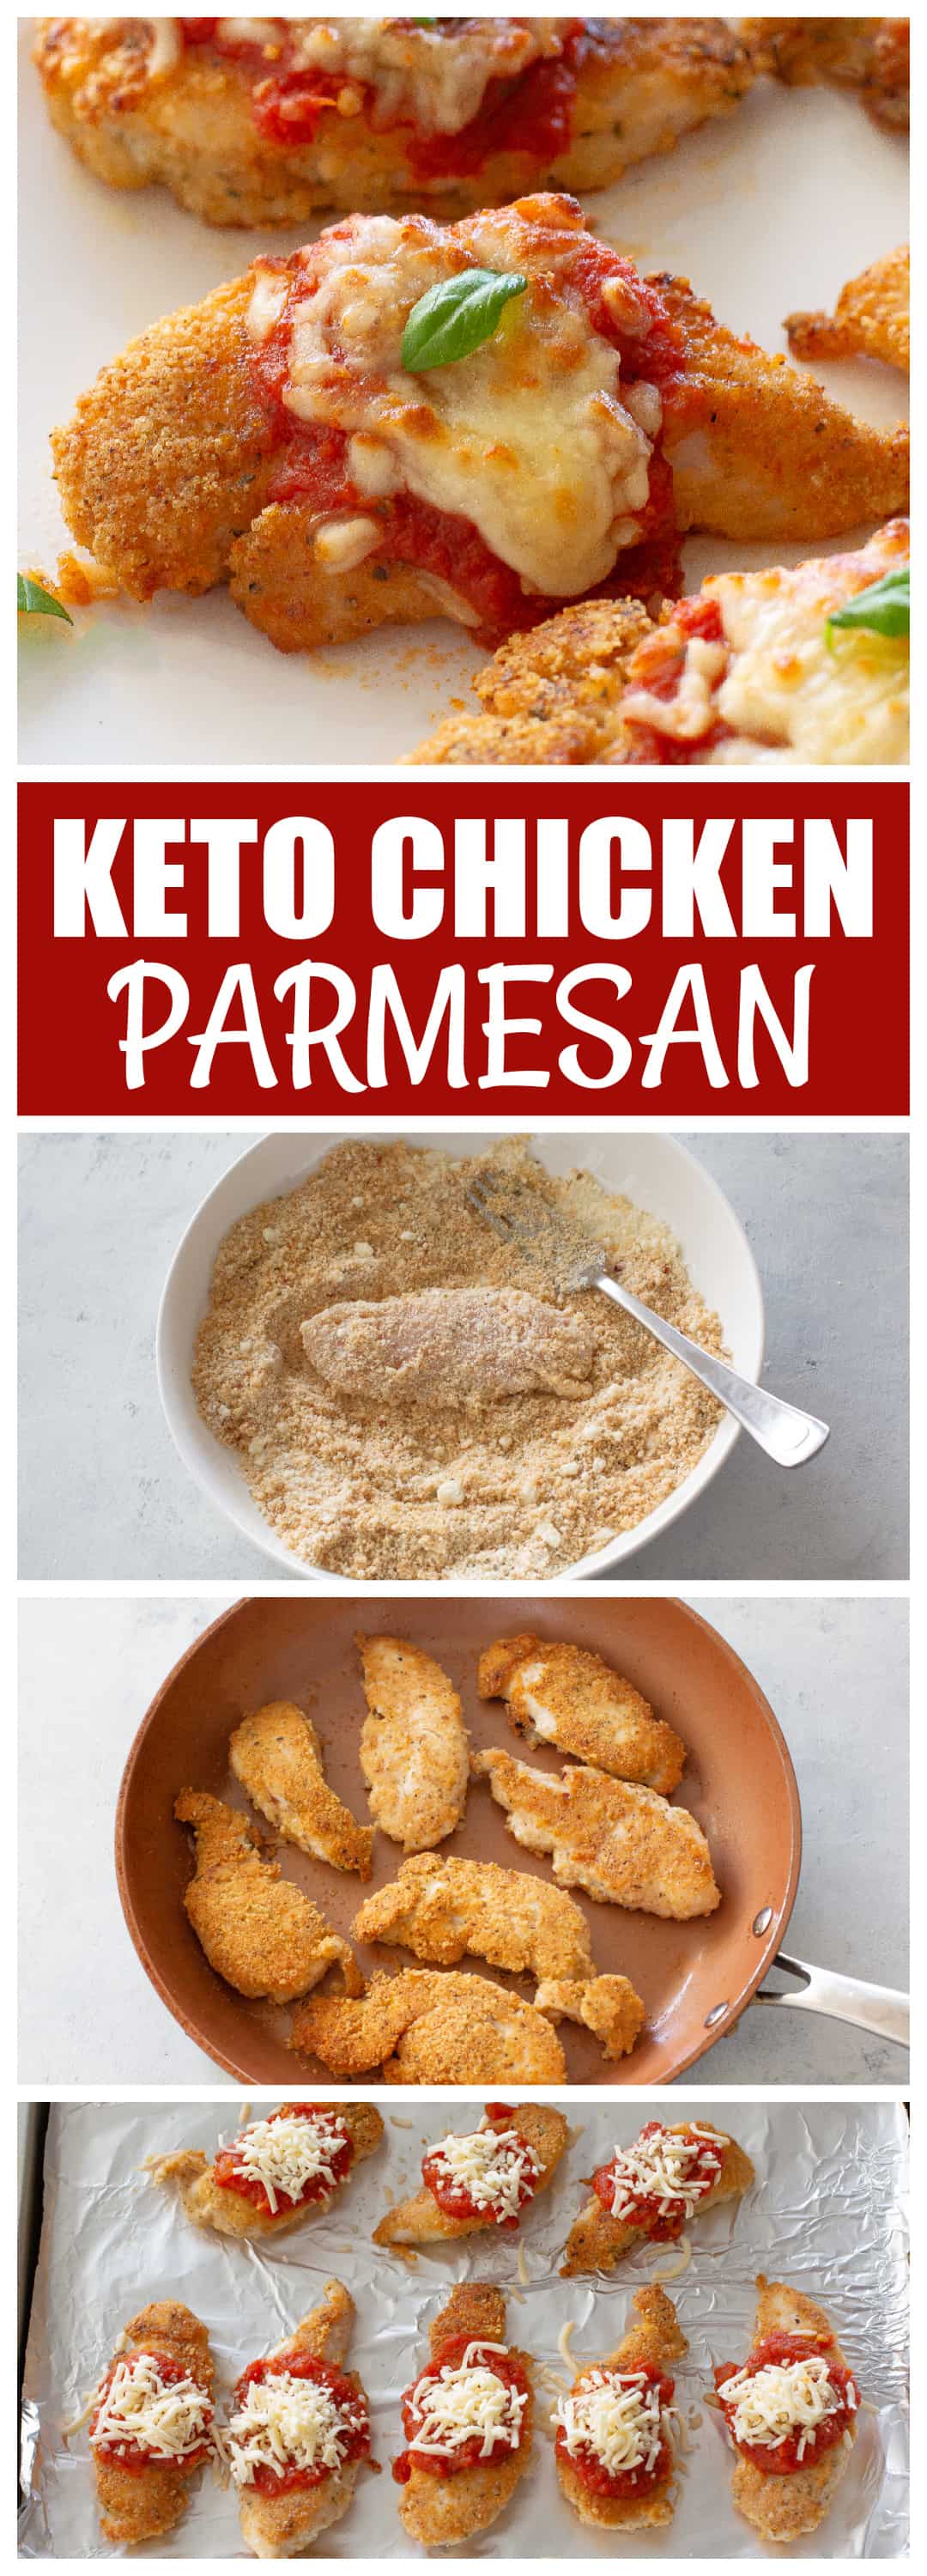 Keto Chicken Parmesan